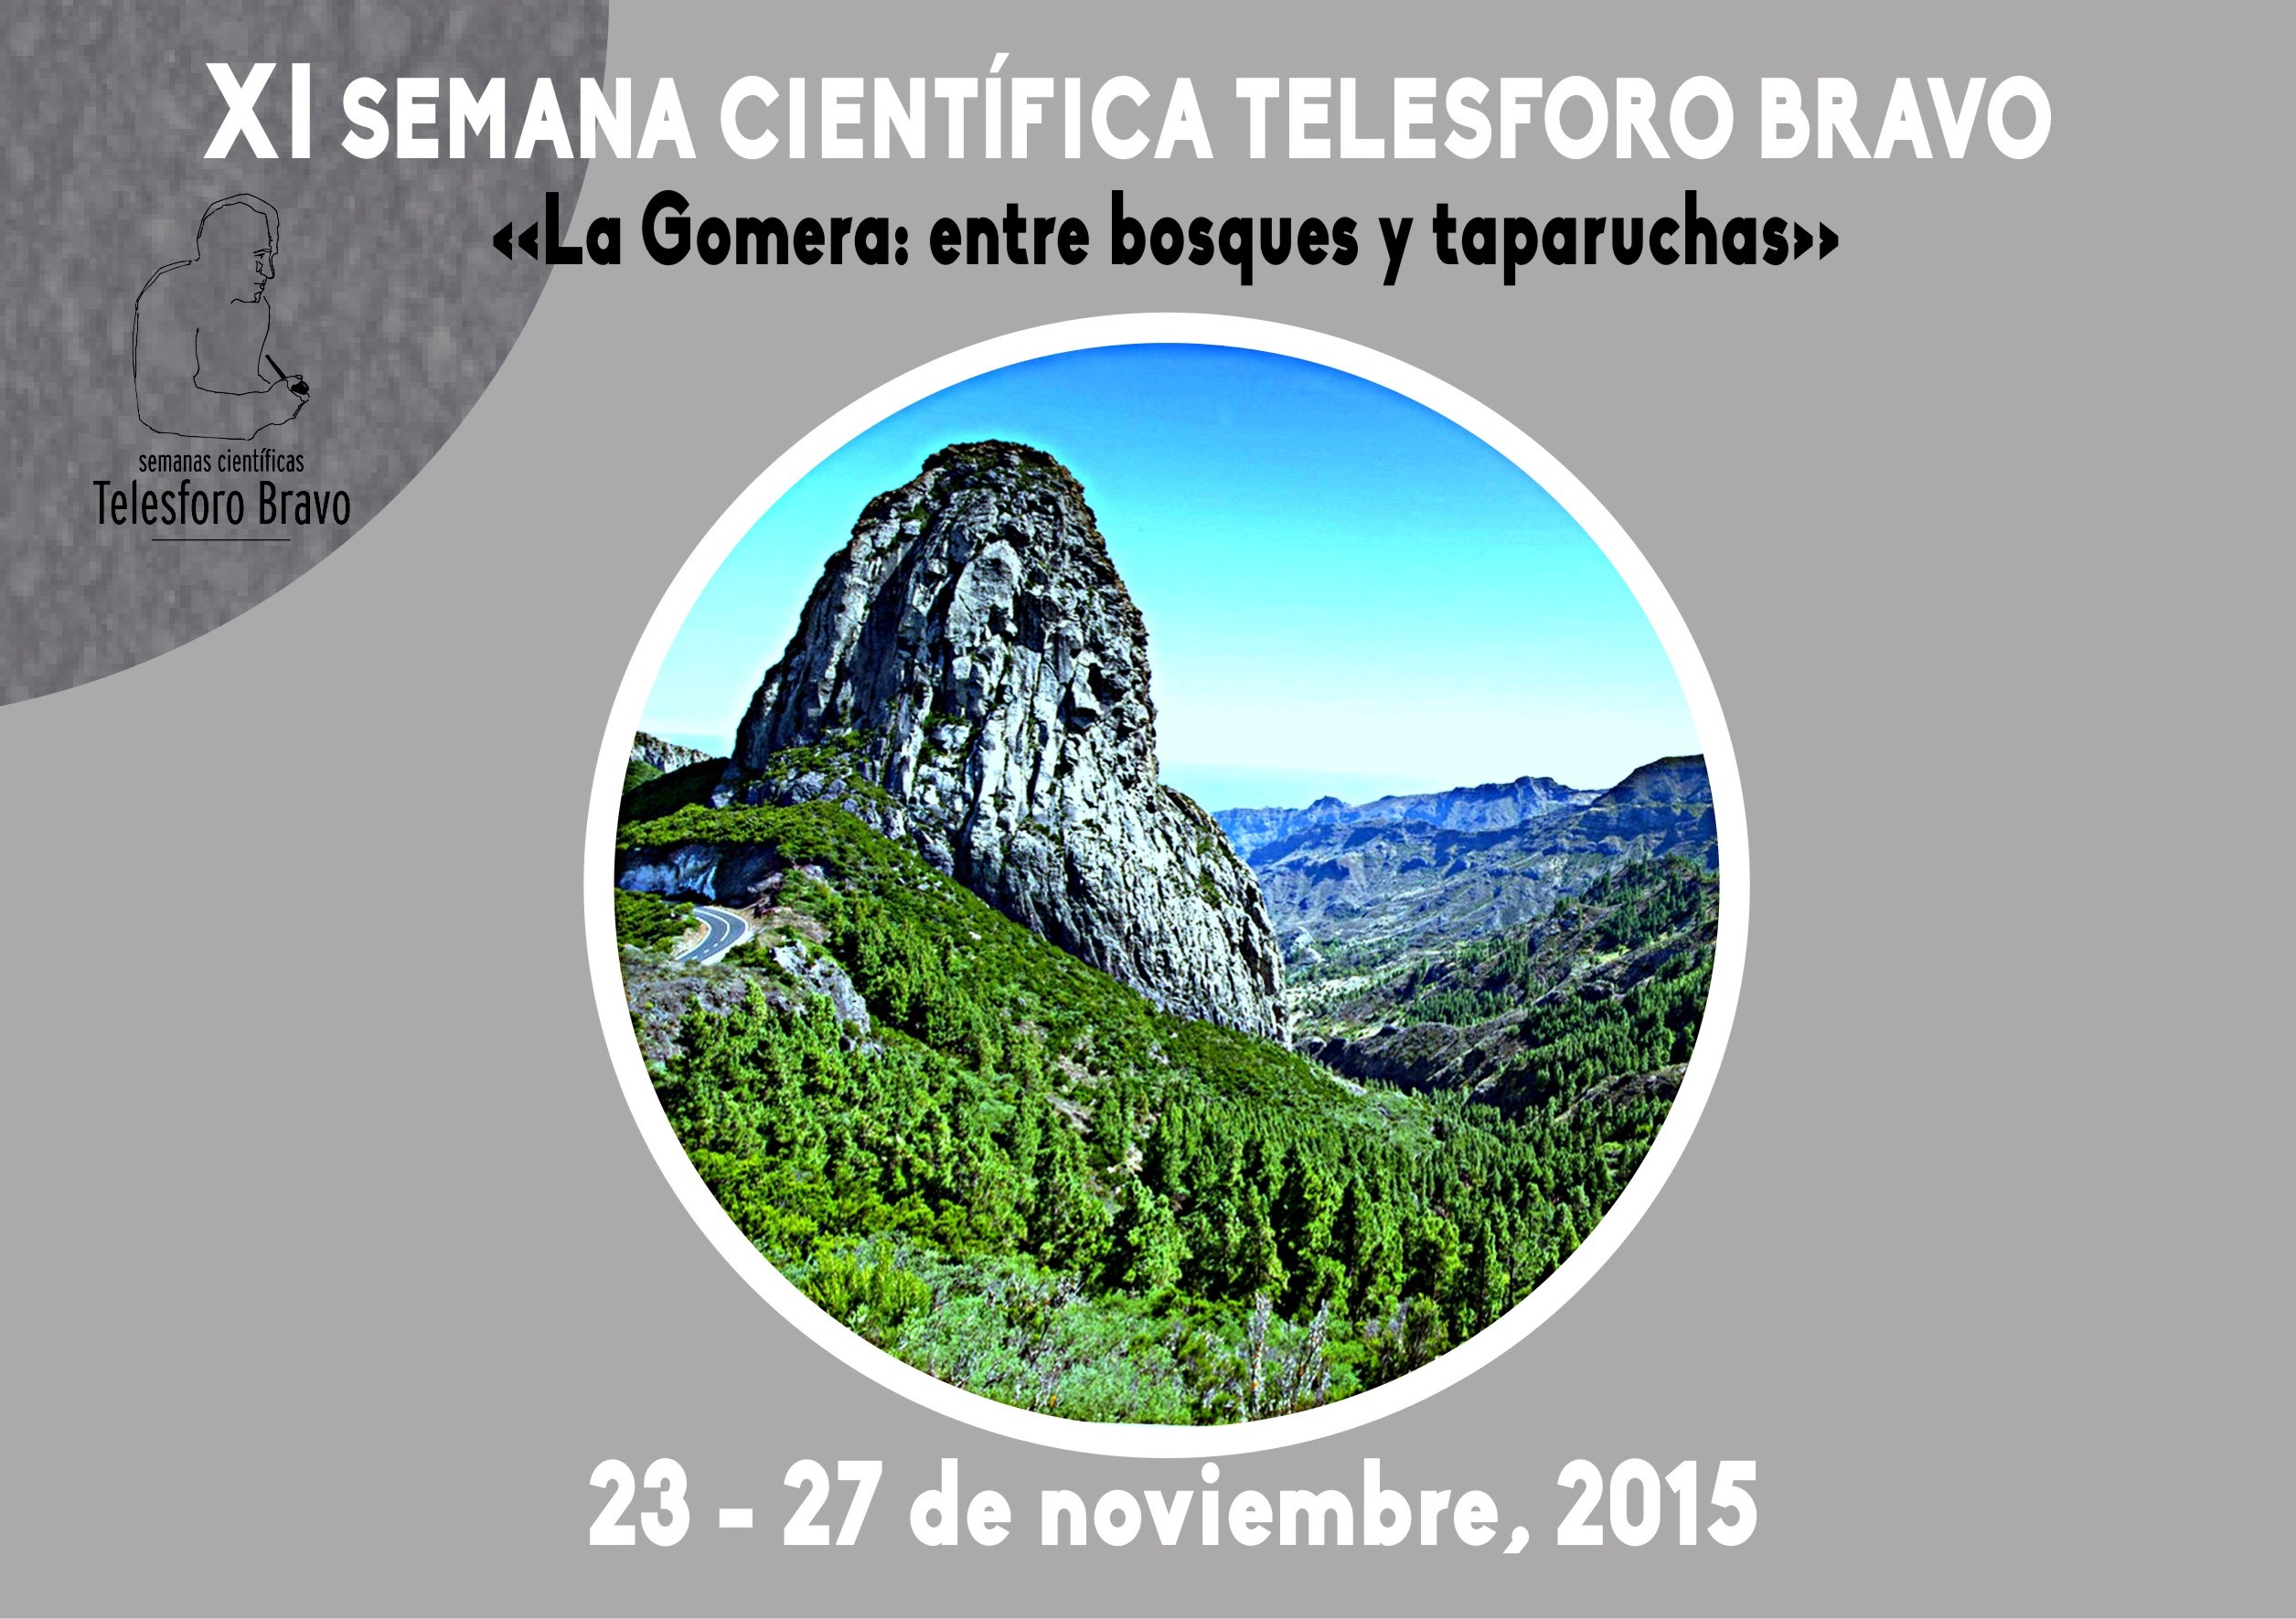  Programa XI Semana Científica Telesforo Bravo, 2015